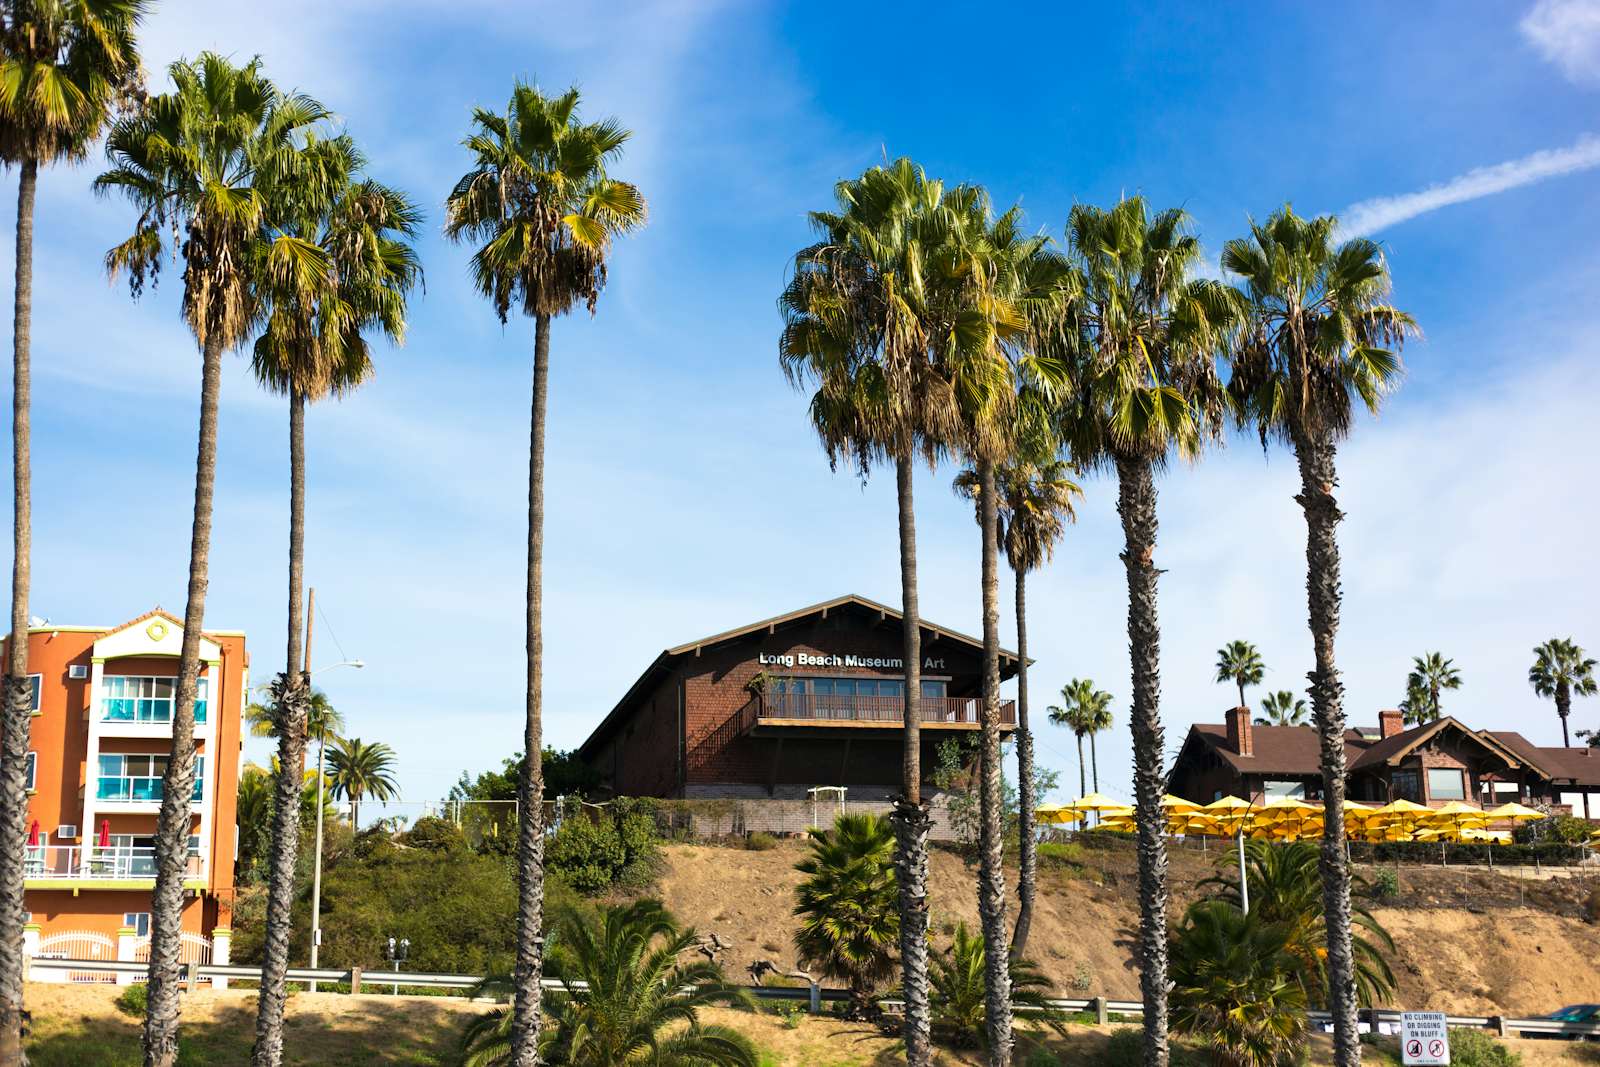 Long Beach Museum of Art in California